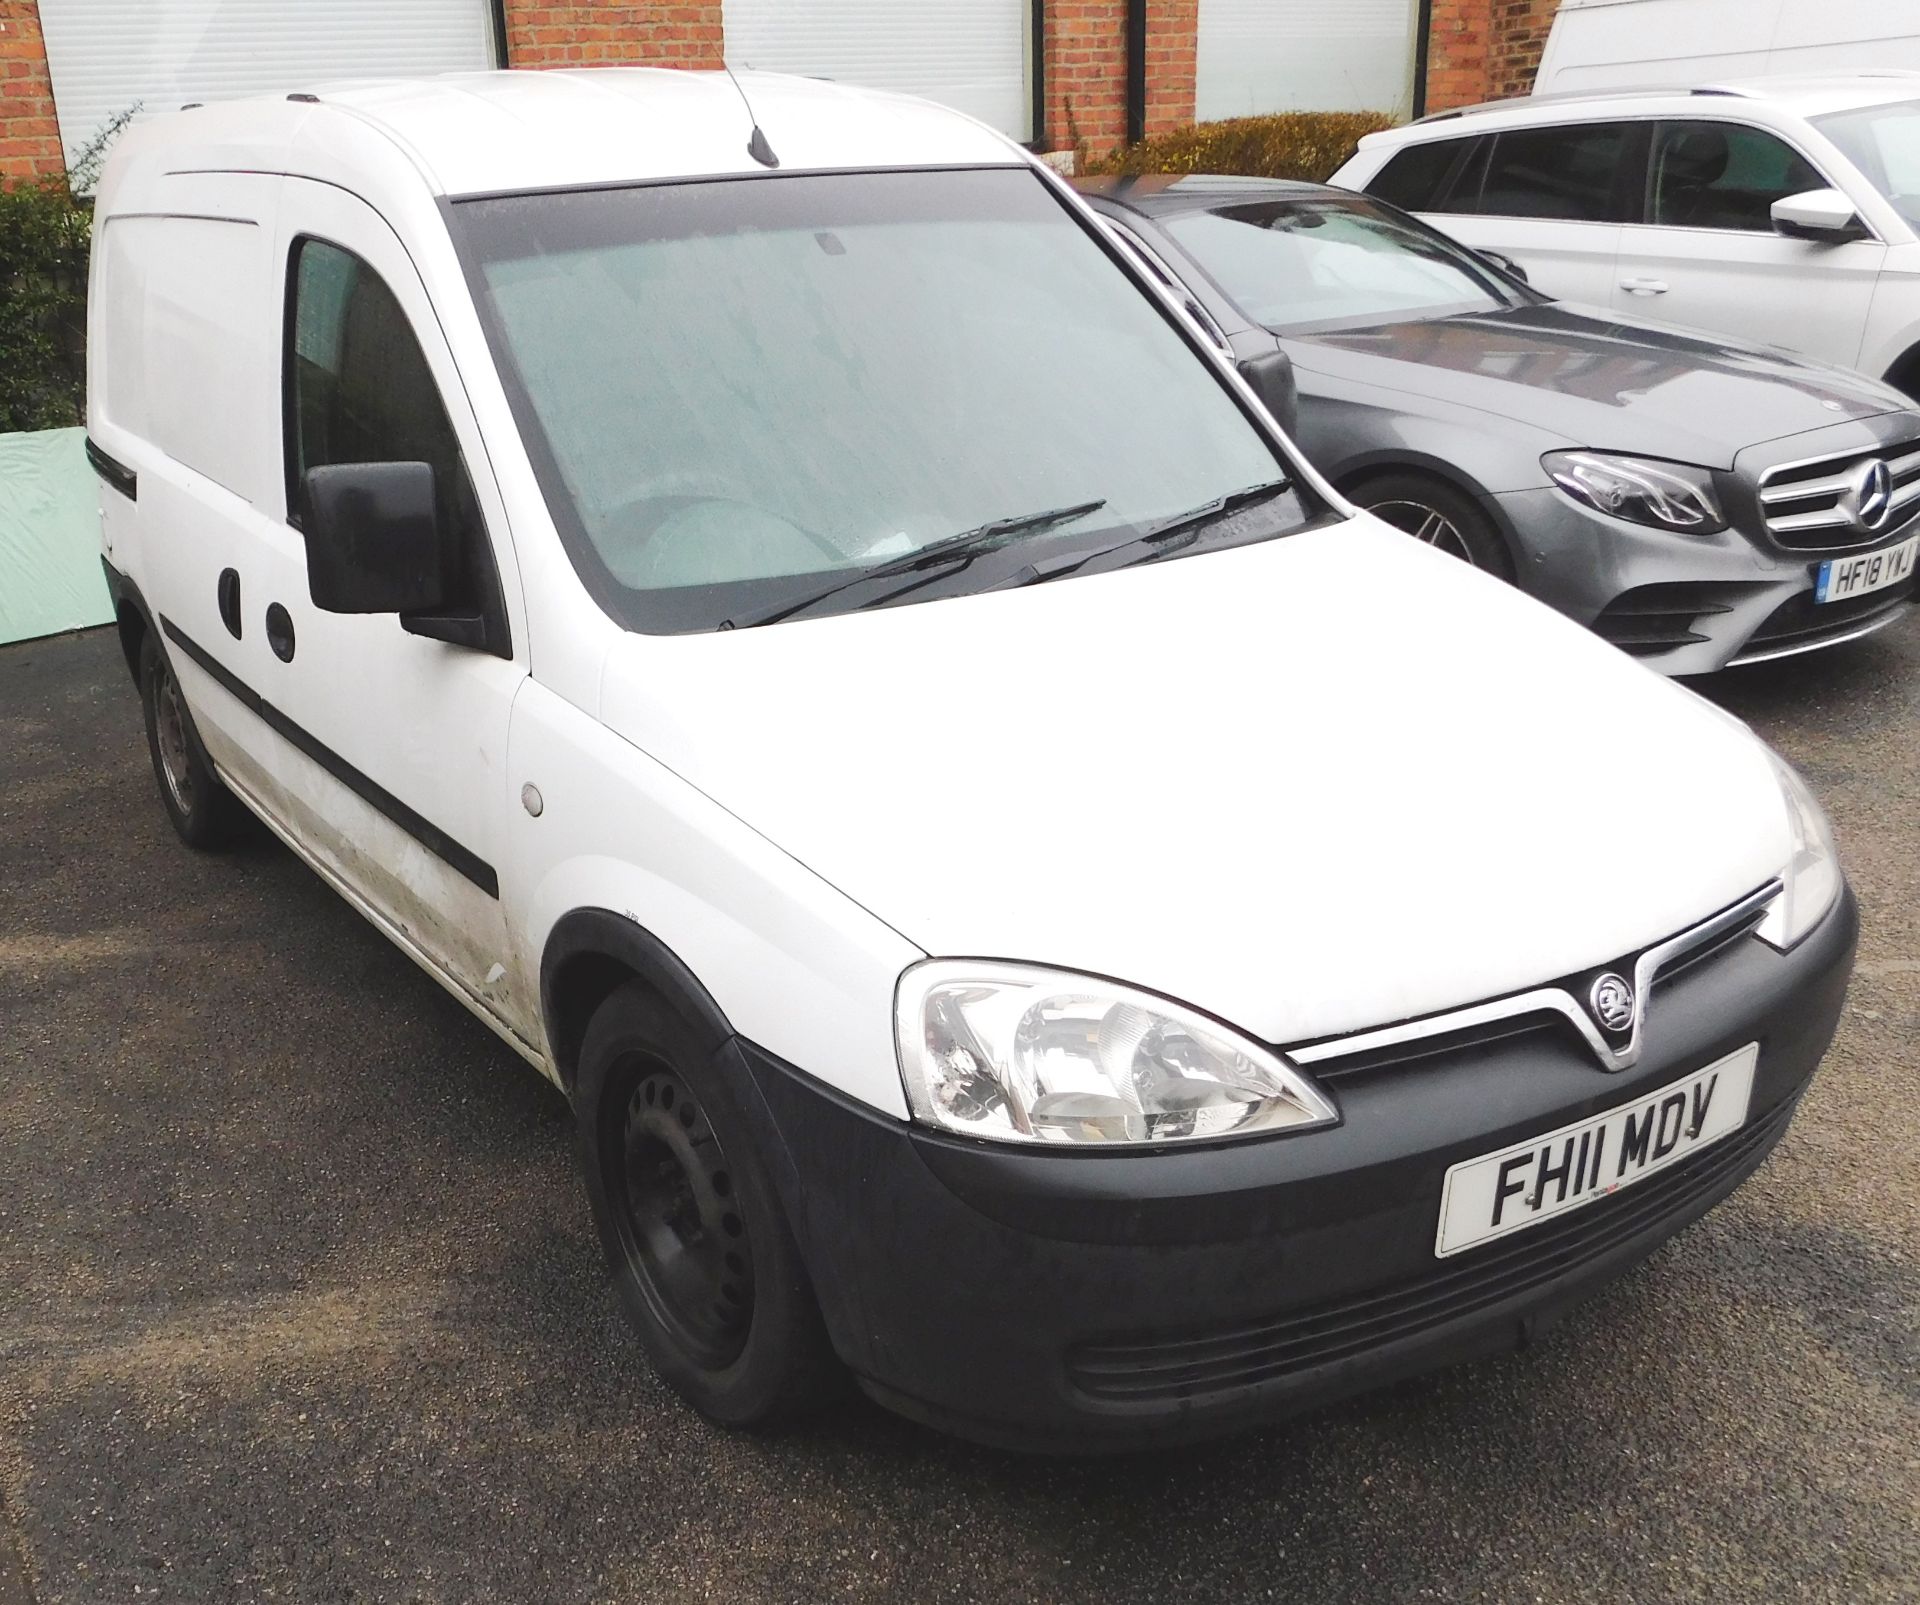 Vauxhall Combo 1.2CDTI Van, Registration FH11 MDV, - Image 3 of 10